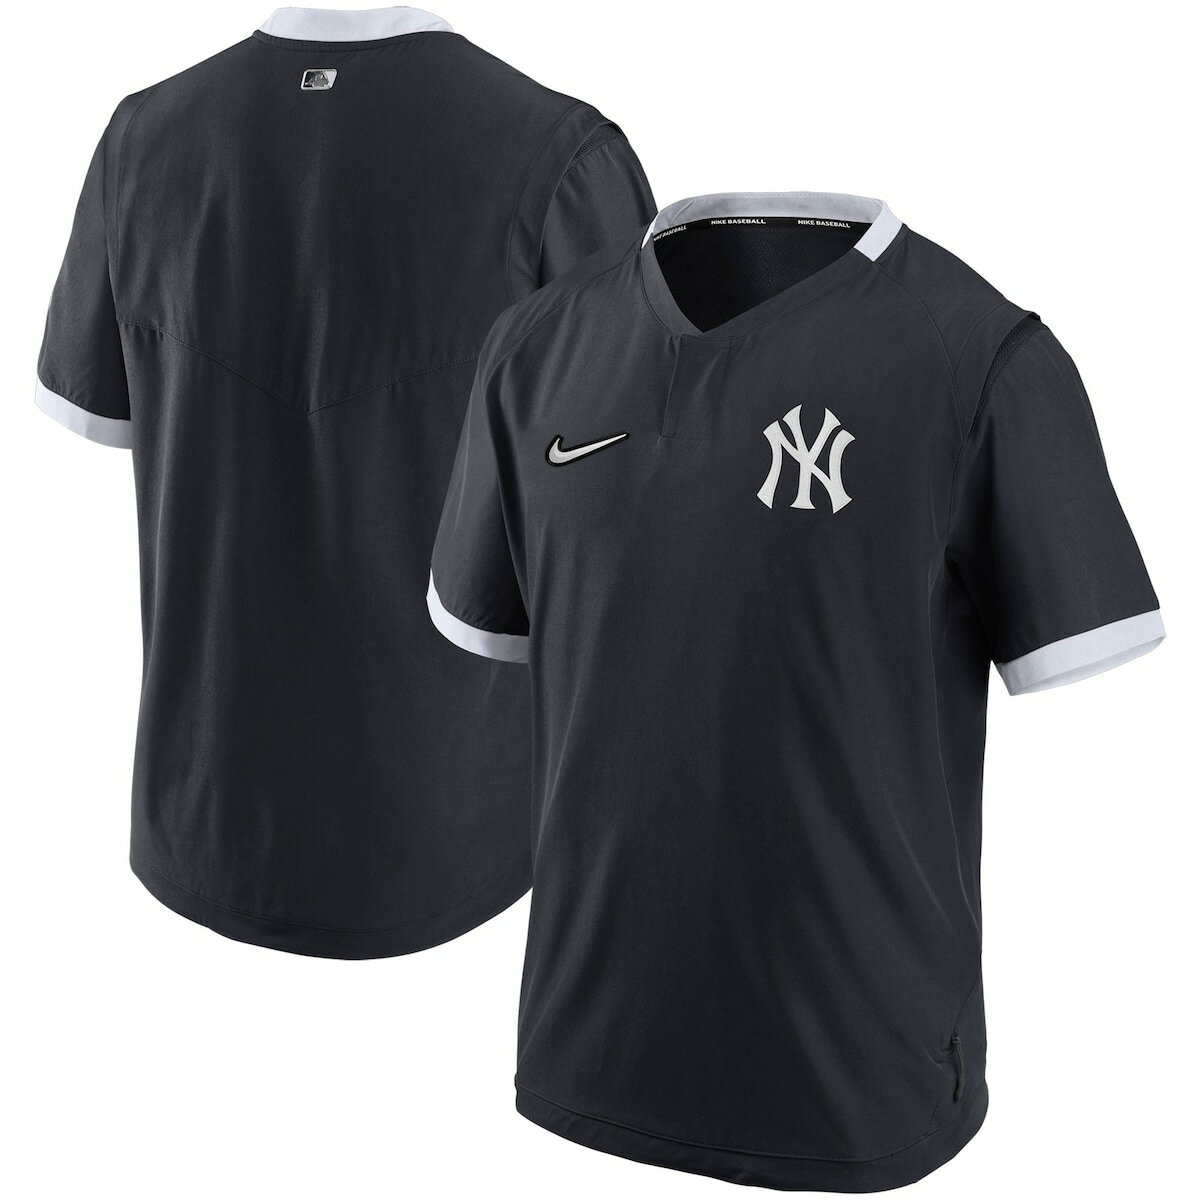 MLB ヤンキース プルオーバー Nike ナイキ メンズ ネイビー (Men's Nike 2020 Authentic Baseball Hot Jacket)